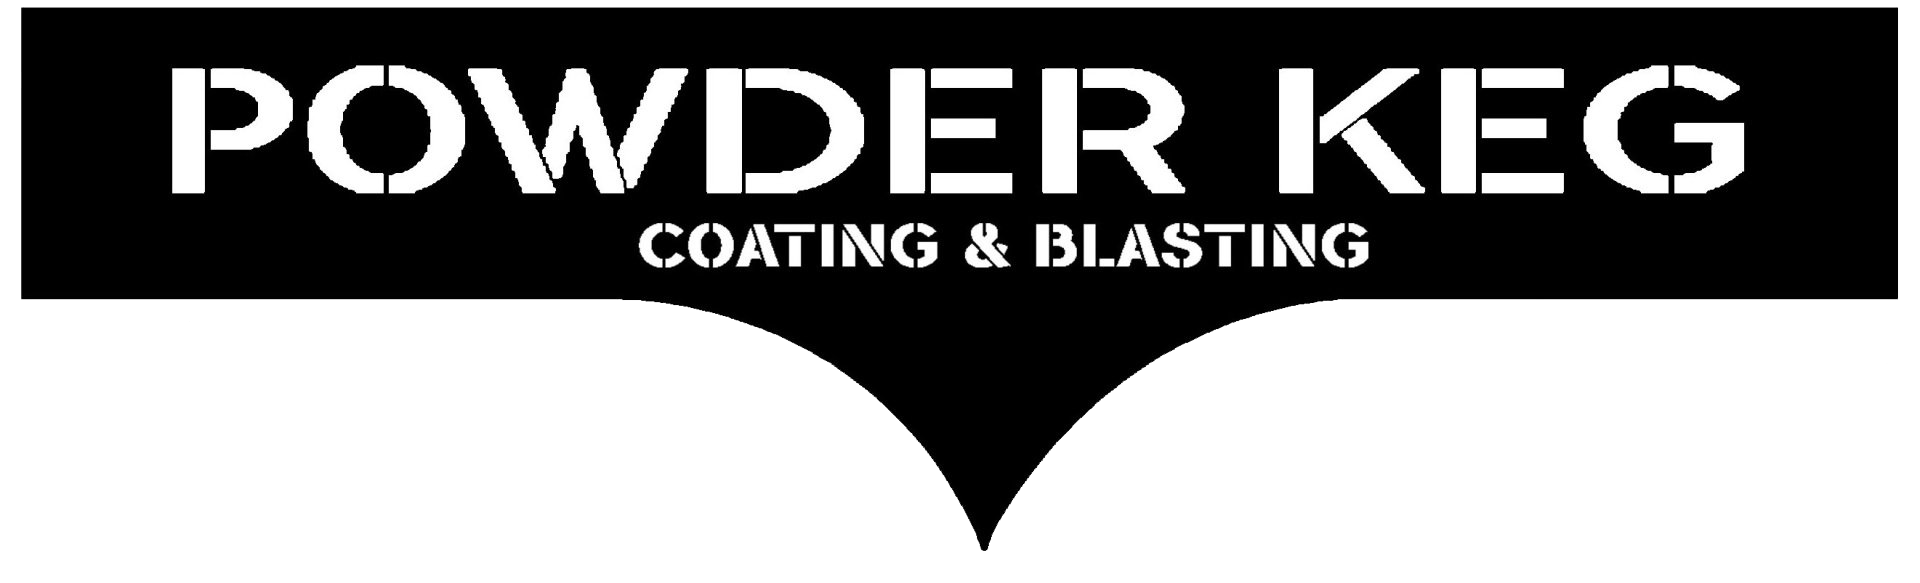 Powder Keg Coating & Blasting Logo